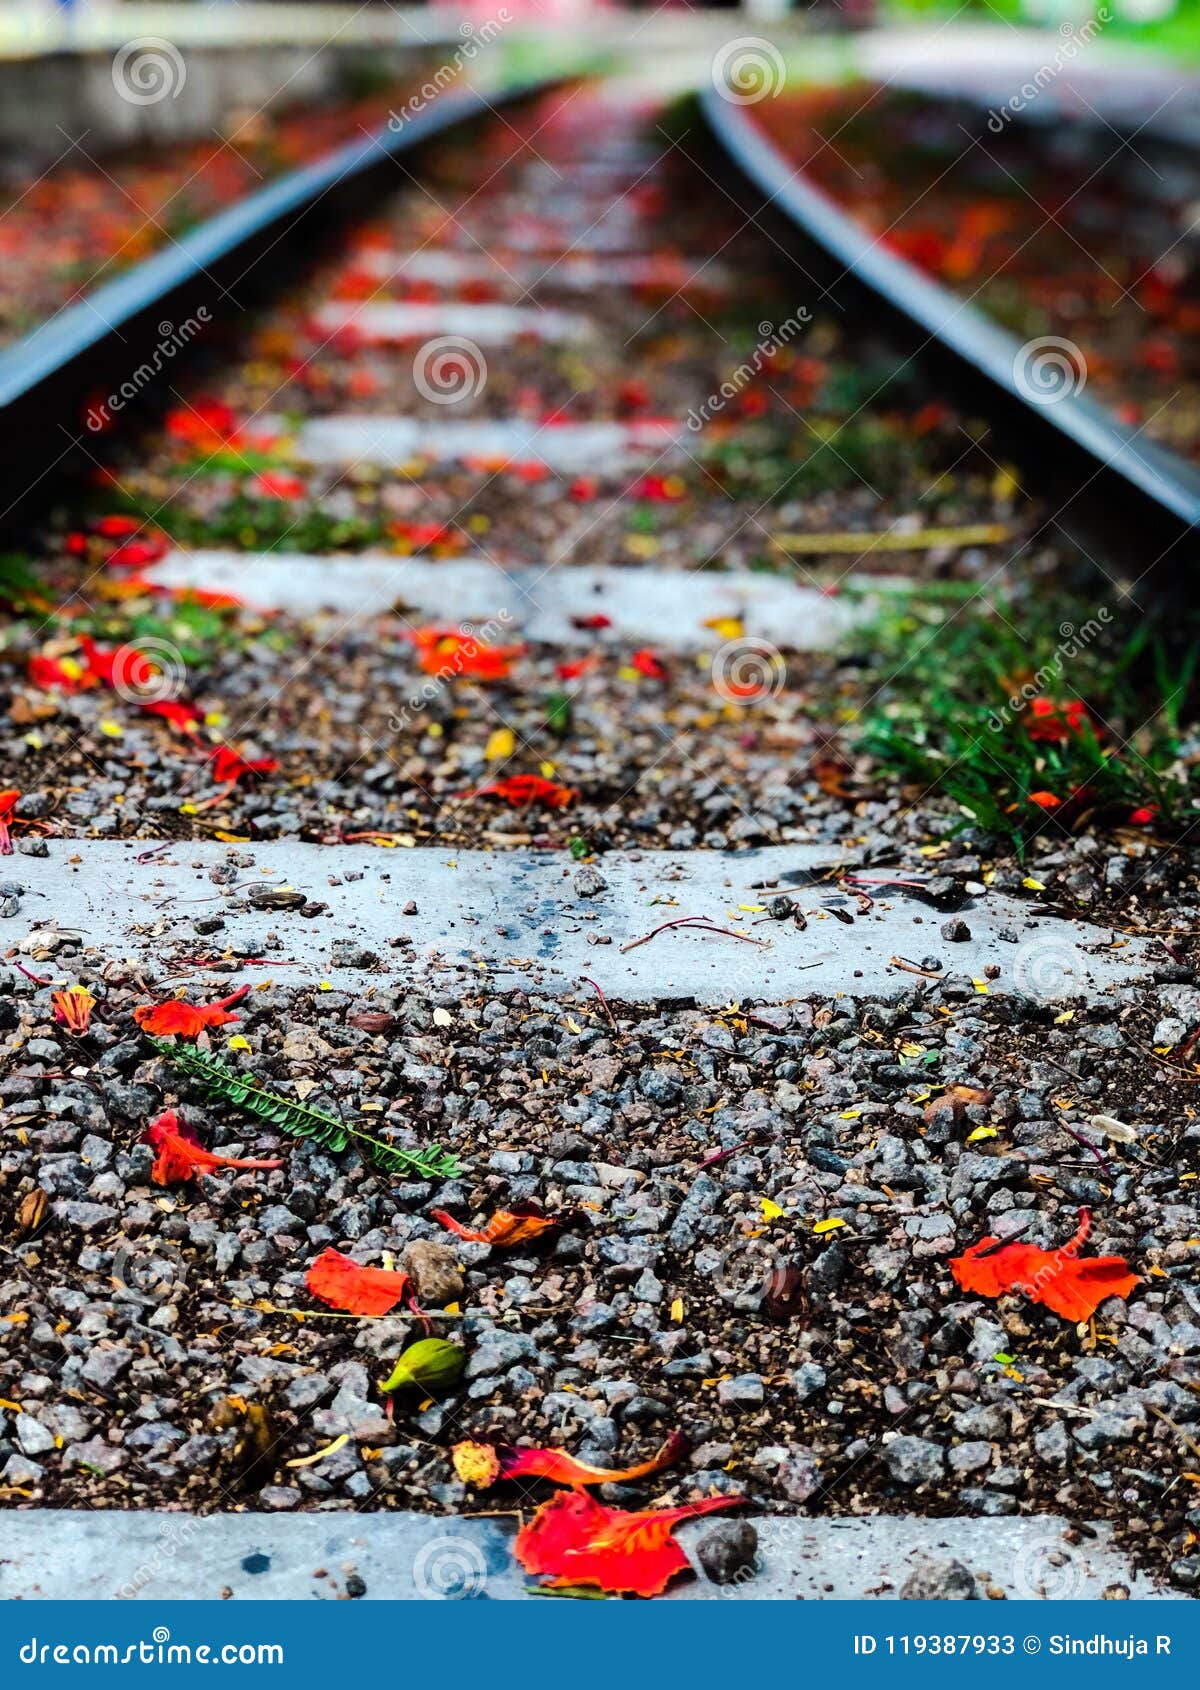 Train Tracks Wallpaper for Mobile Stock Image - Image of petals, railway:  119387933